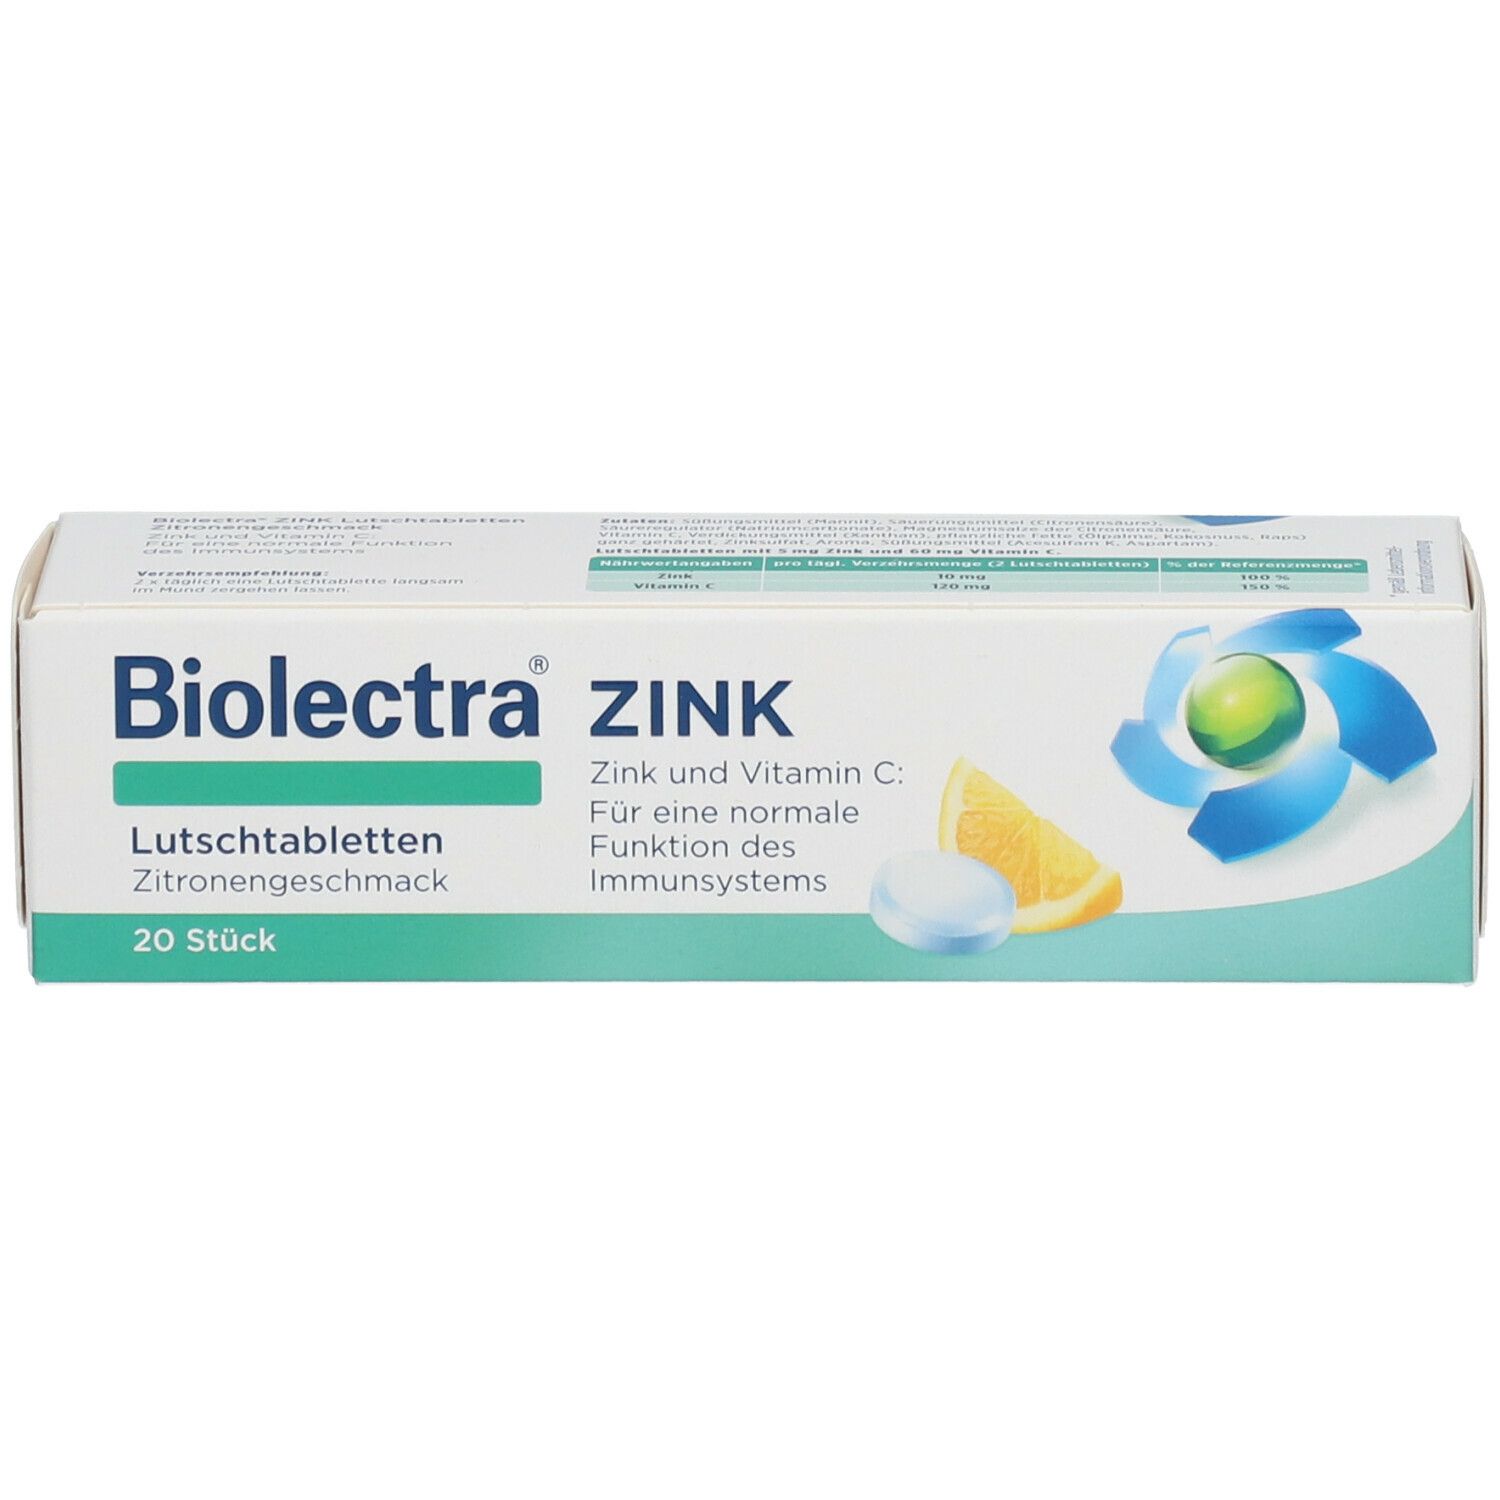 Biolectra® Zink